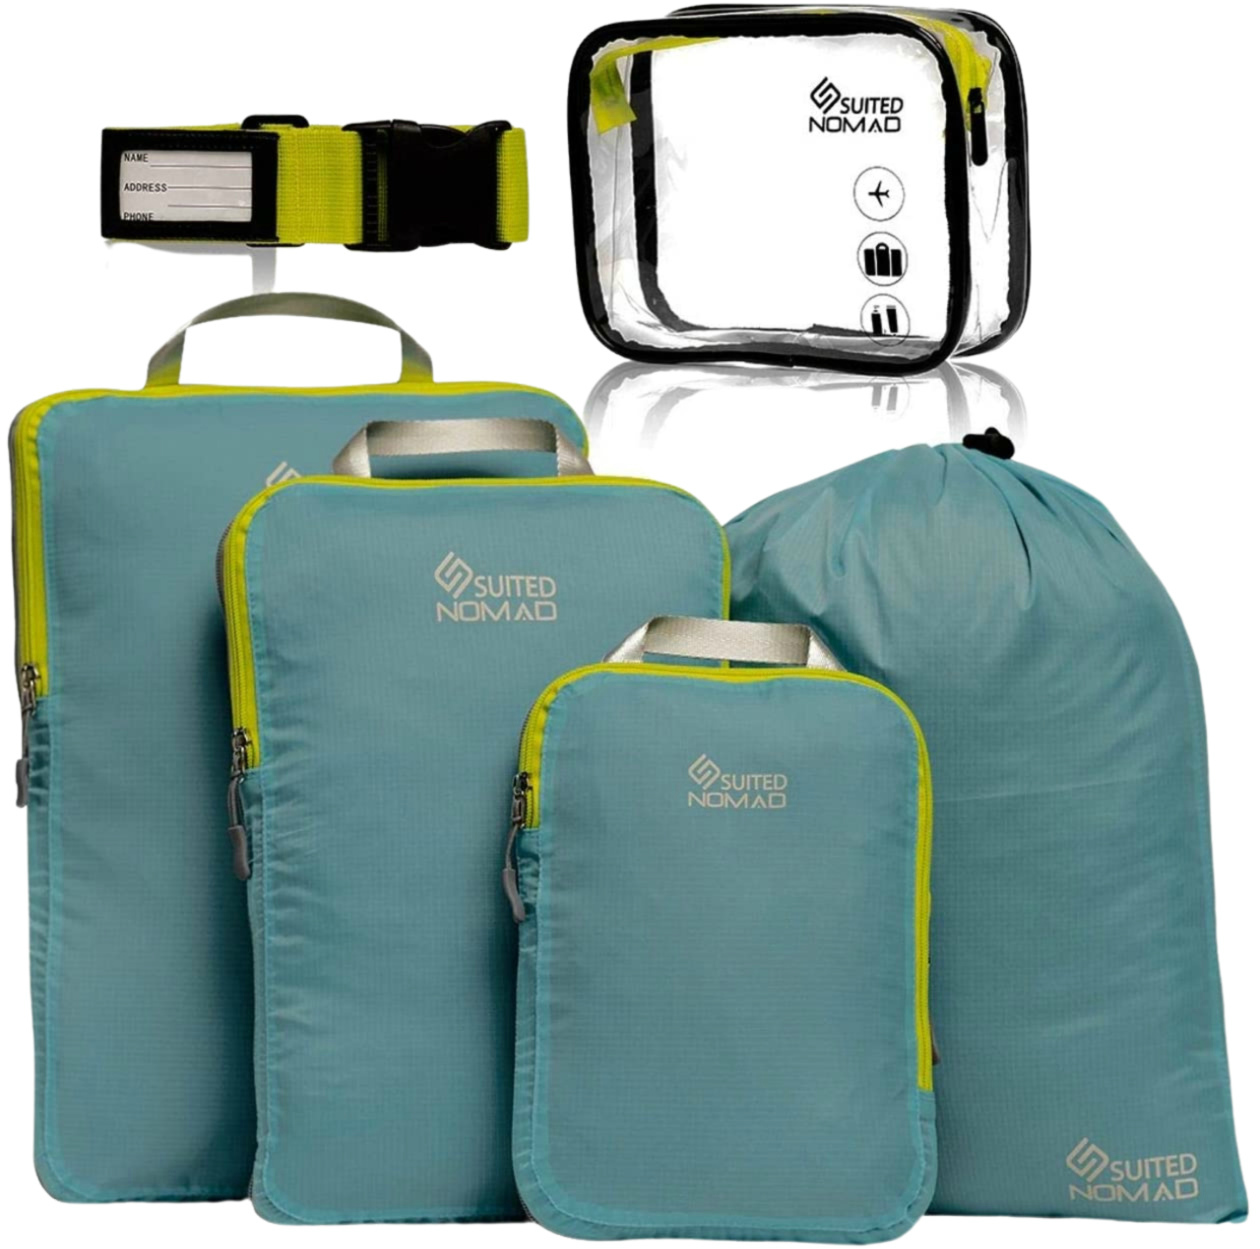 https://travelfashiongirlpostphotos.s3.us-east-2.amazonaws.com/2020/Best+Vacuum+Seal+Bags+for+Clothes/best-vacuum-storage-bags-for-clothes-9.jpg